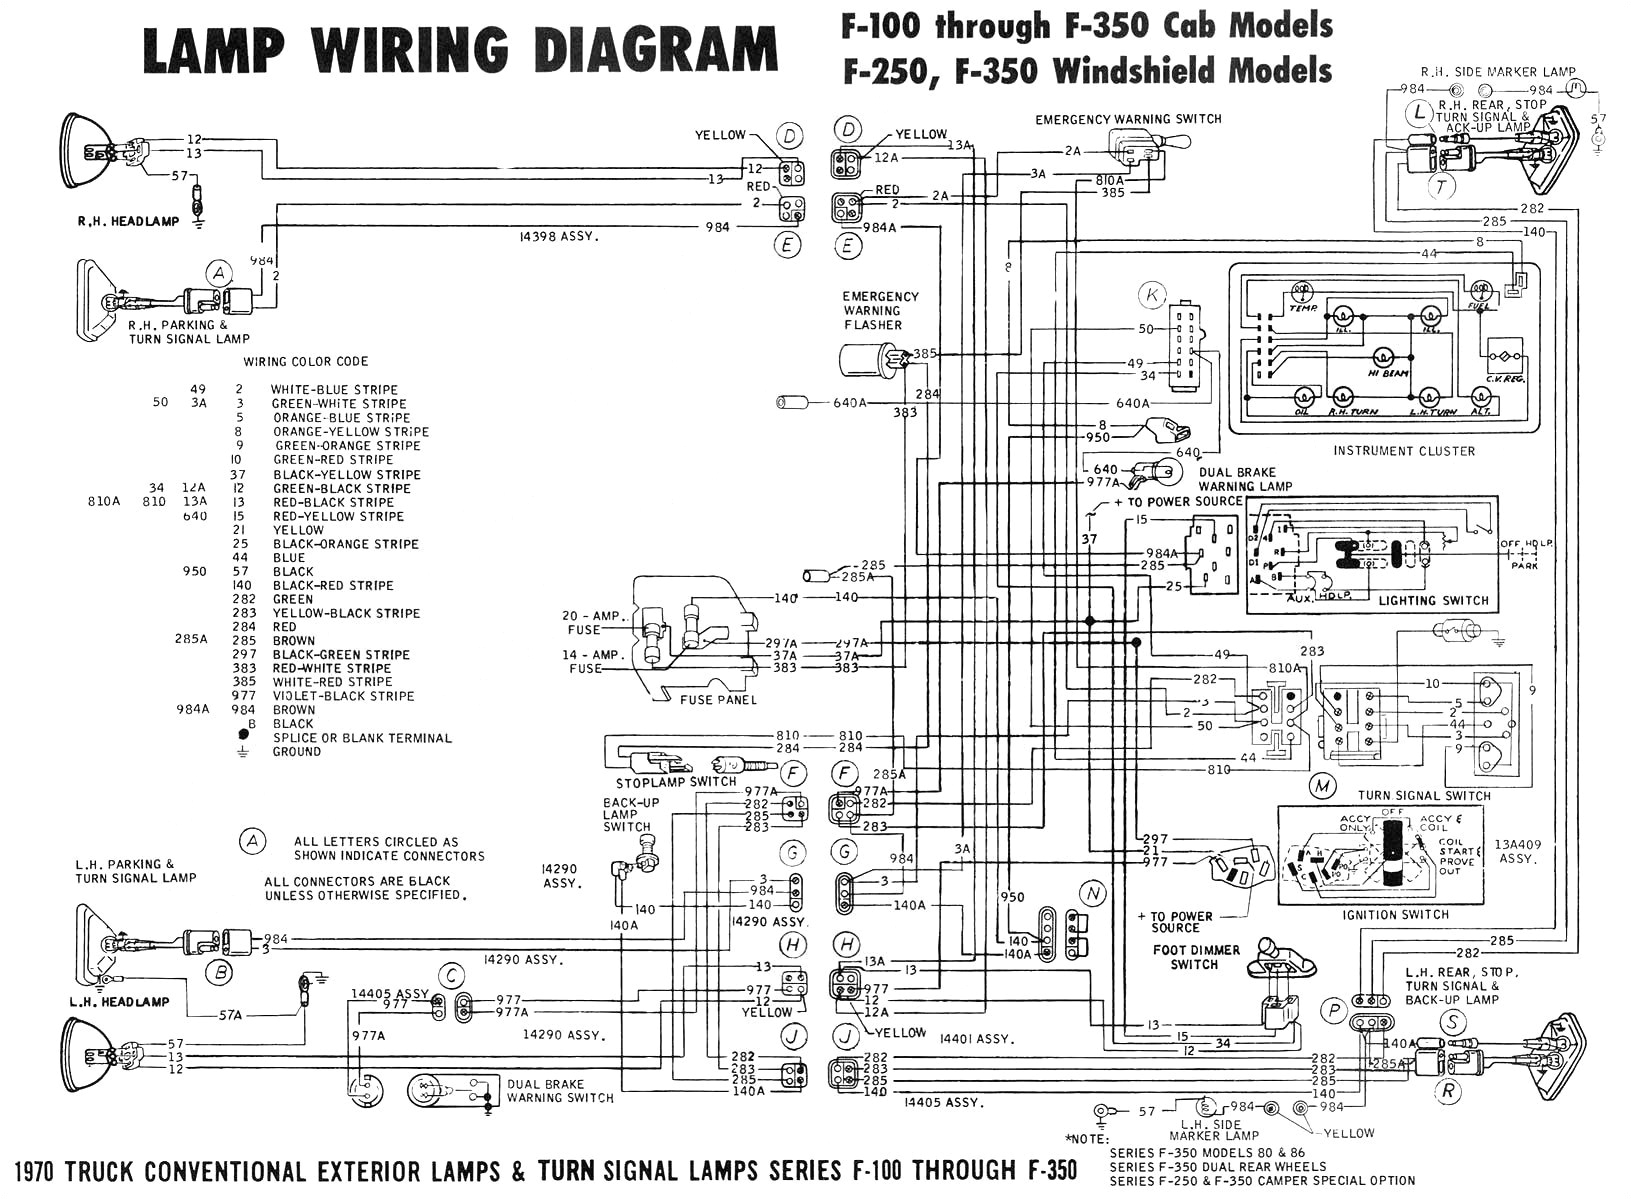 2002 mitsubishi eclipse stereo wiring diagram audi a4 stereo wiring diagram download of 2002 mitsubishi eclipse stereo wiring diagram jpg